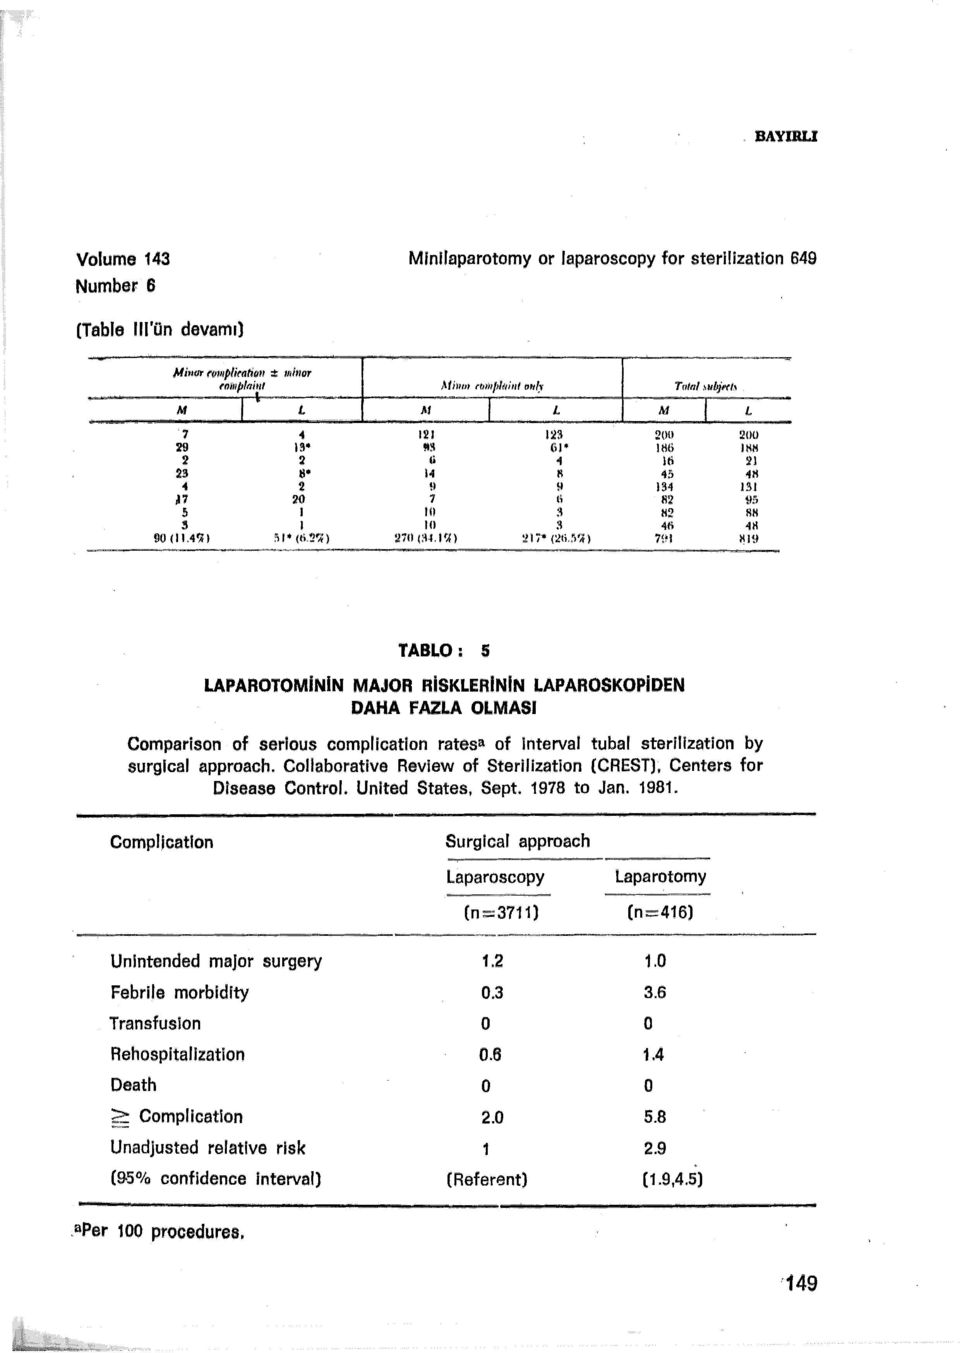 4 tjhi TABLO: 5 LAPAROTOMININ MAJOR RiSKLERiNiN LAPAROSKOPiDEN DAHA FAZLA OLMASI Comparison of serious complication ratesa of lnterval tuba! sterilization by surglcal approach.